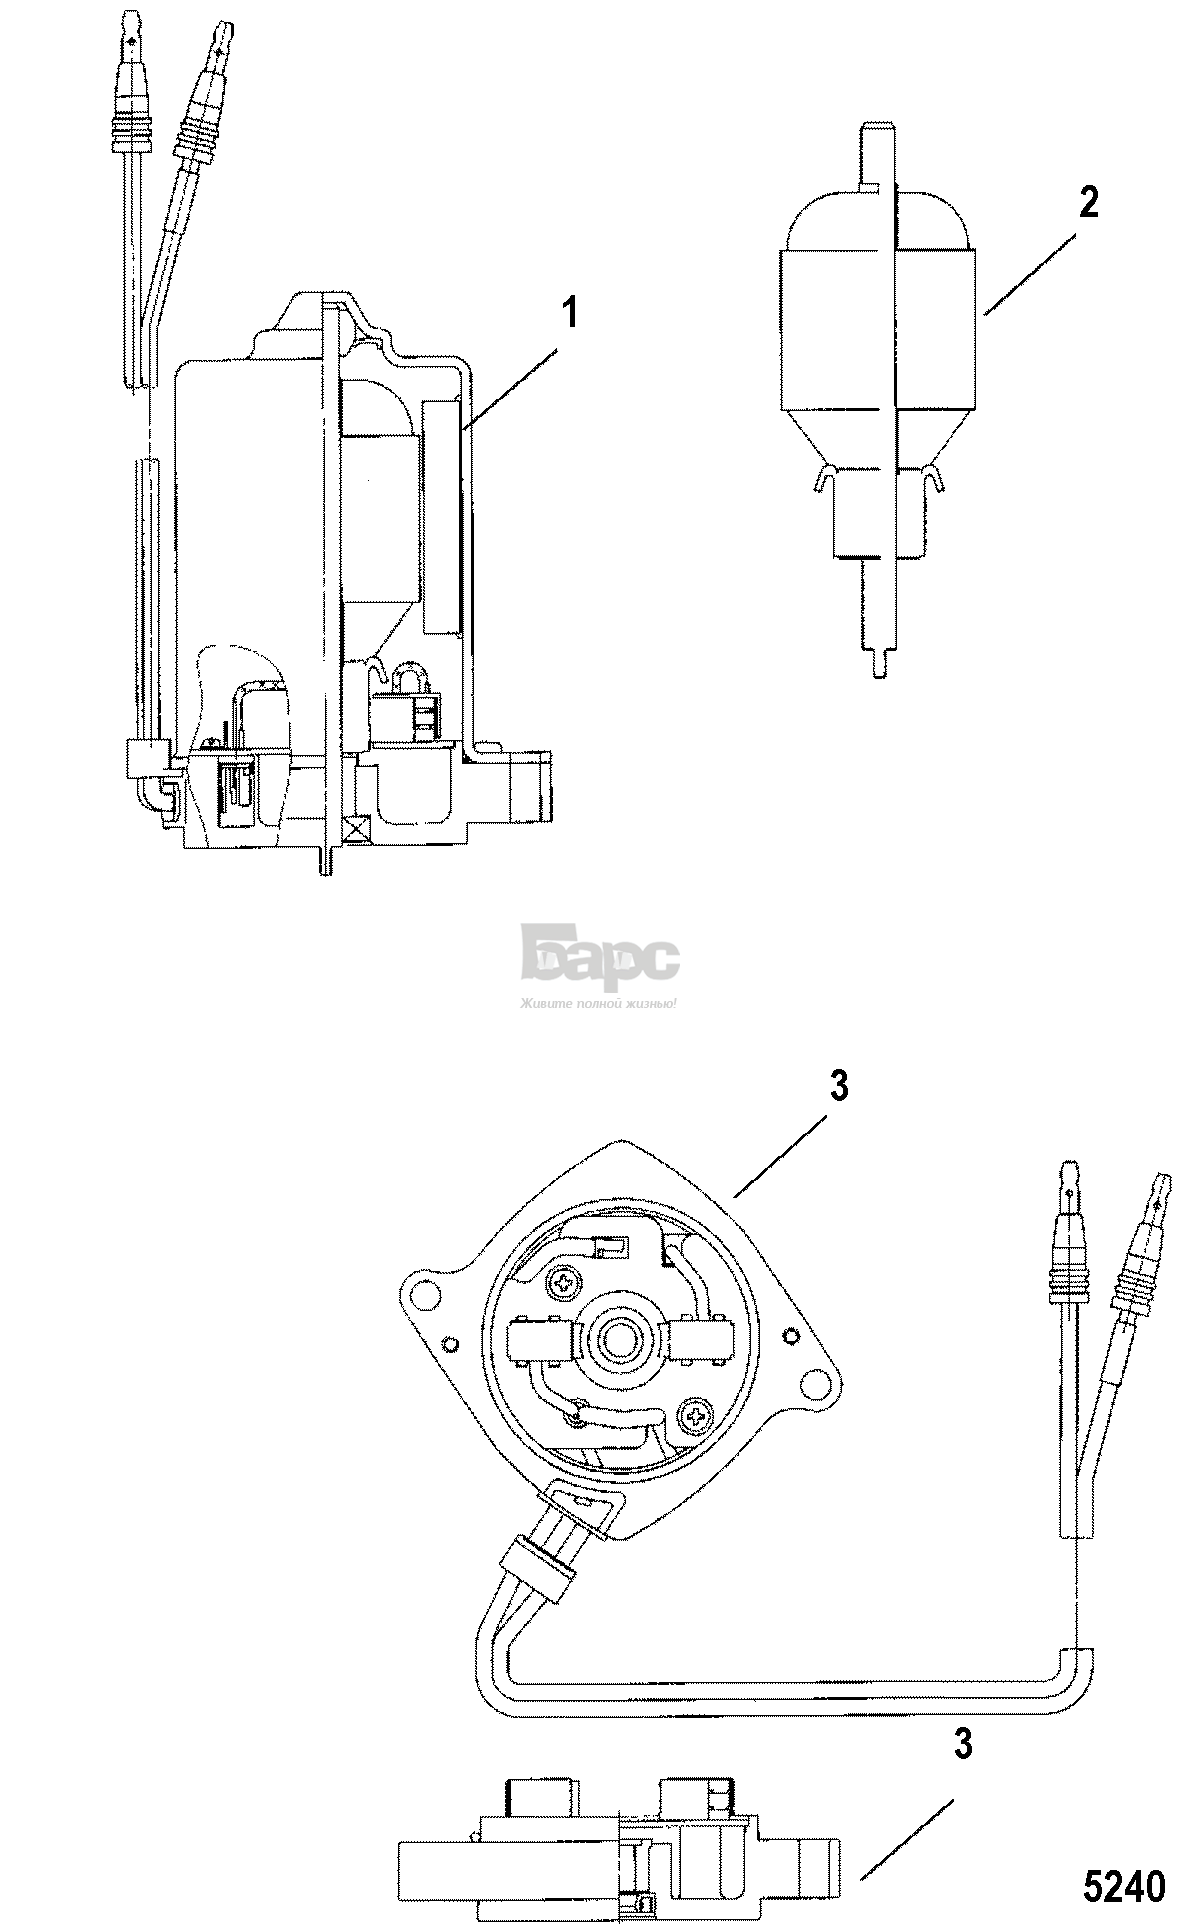 Power Trim Motor(Removable Pump Housing)